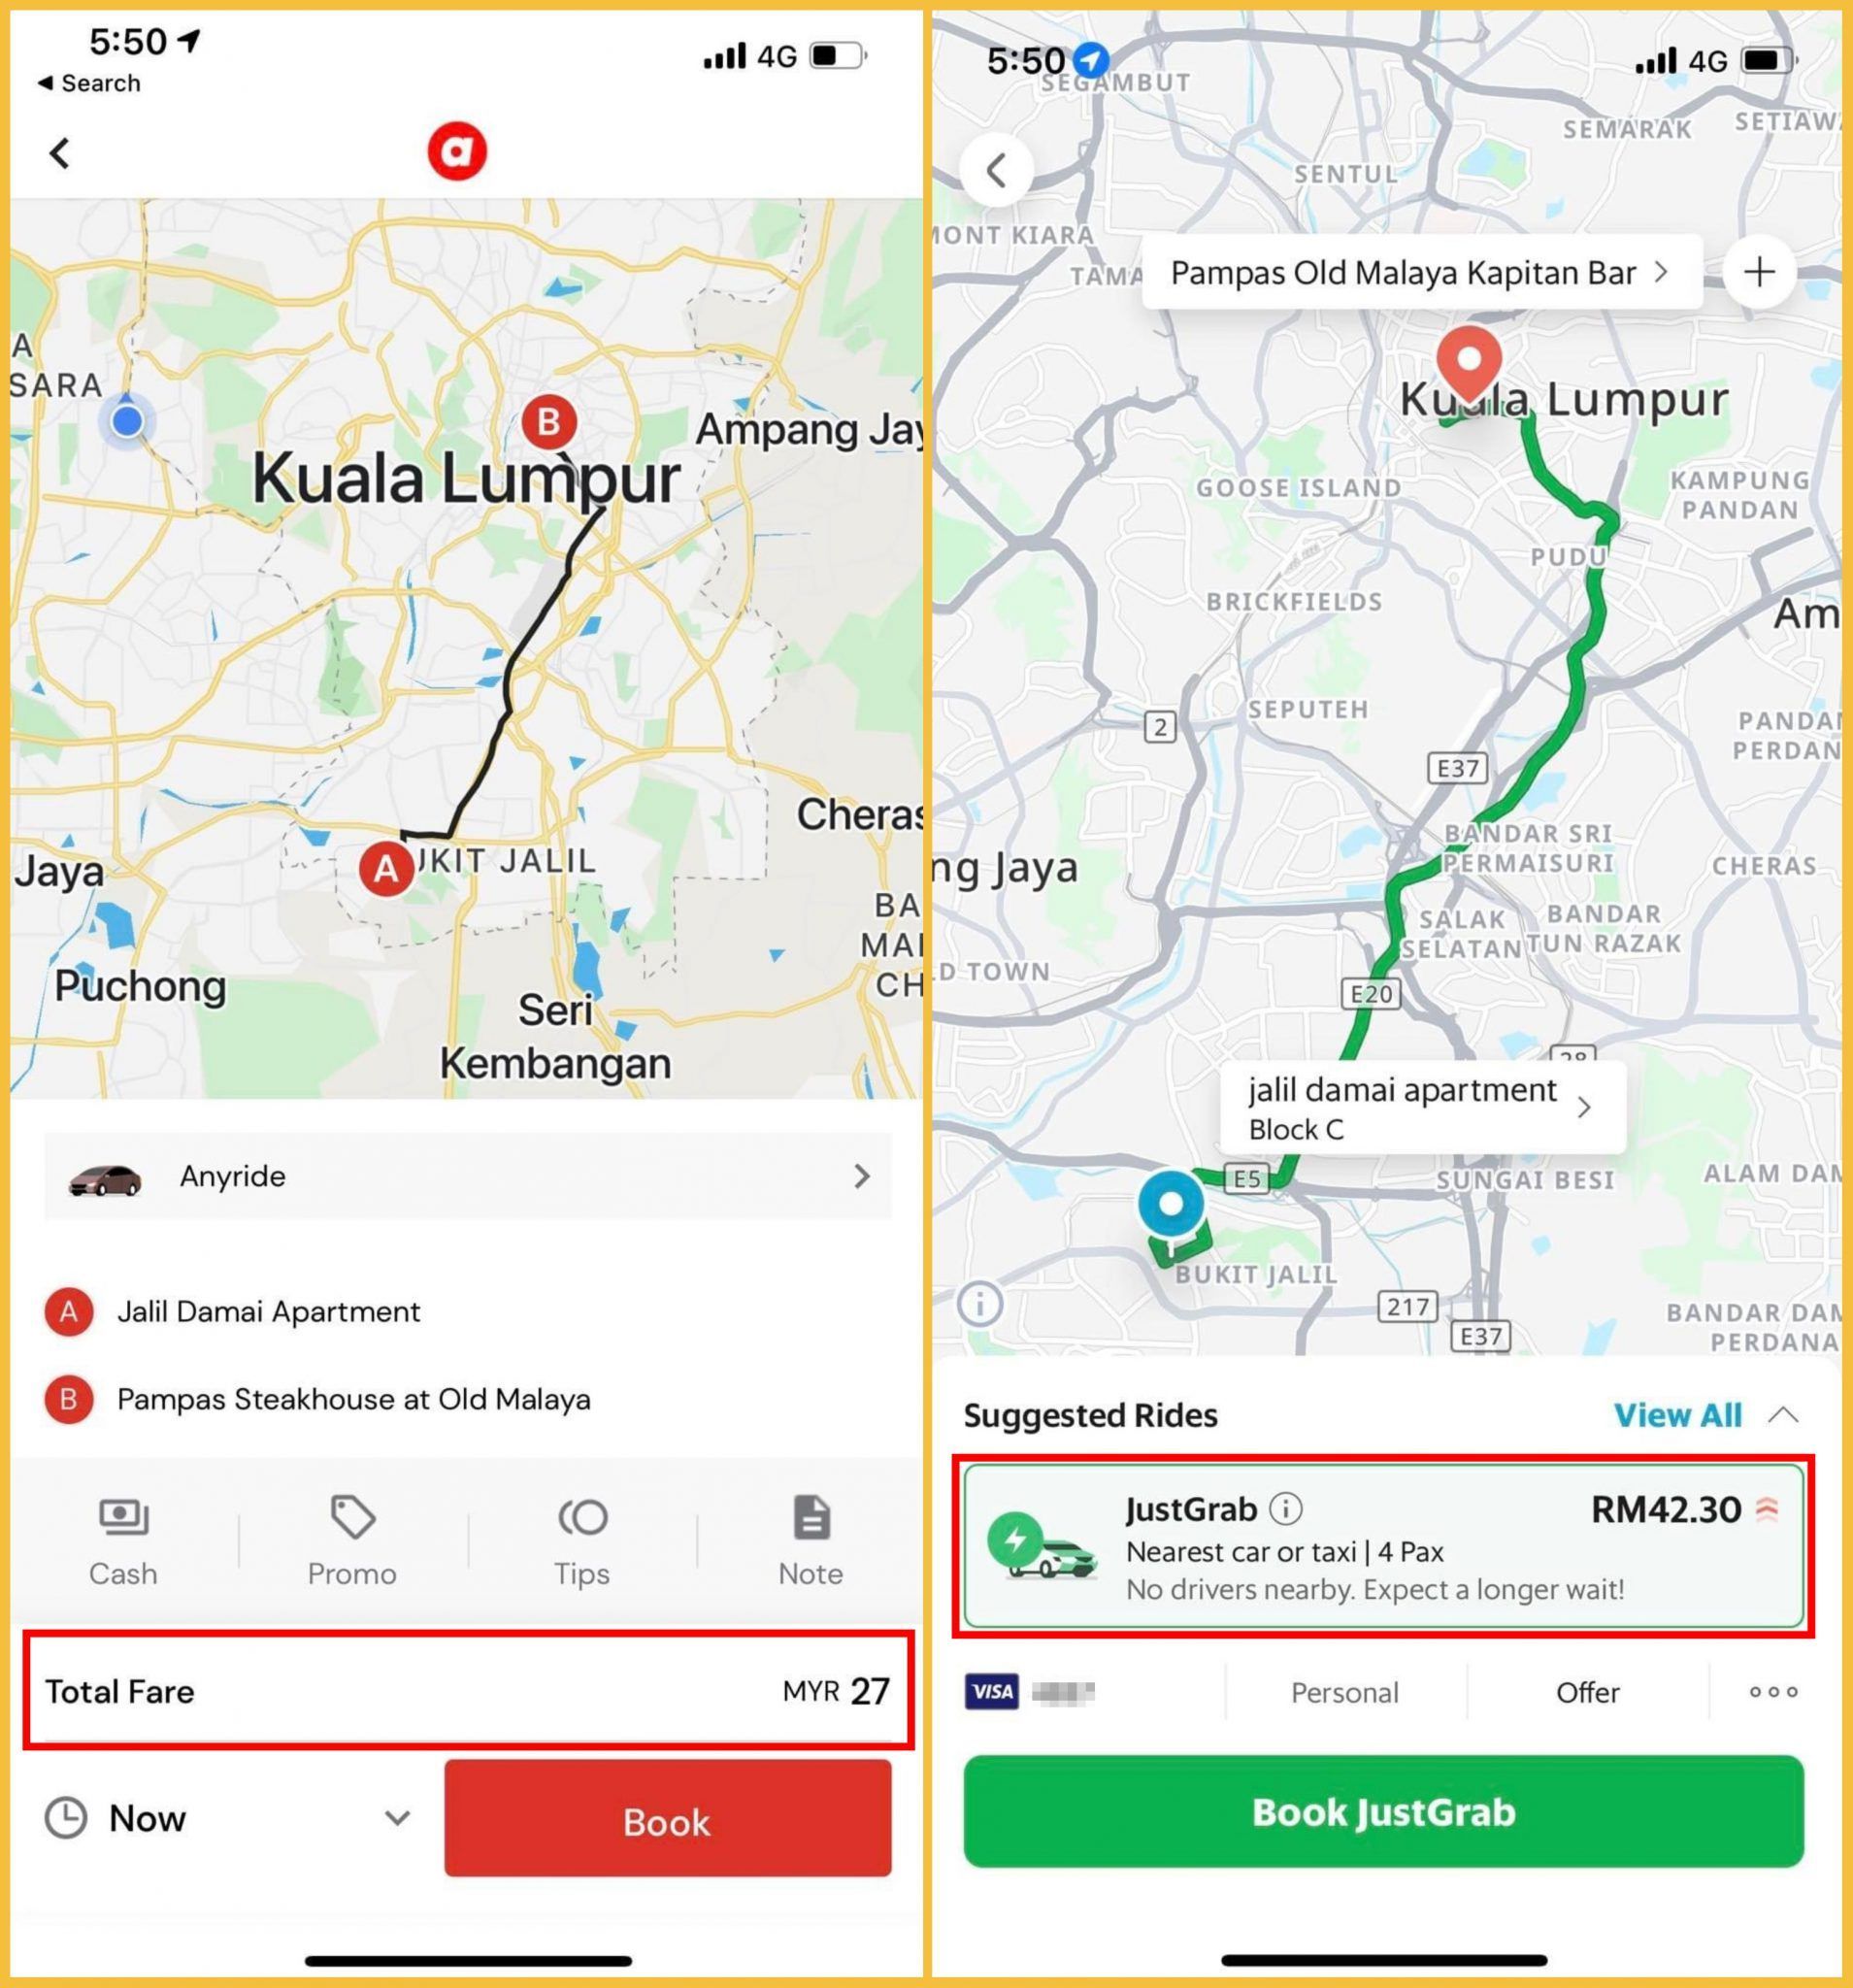 Compare Grab and AirAsia Ride in Kuala Lumpur's e-hailing scene. Grab drivers vs. AirAsia drivers.